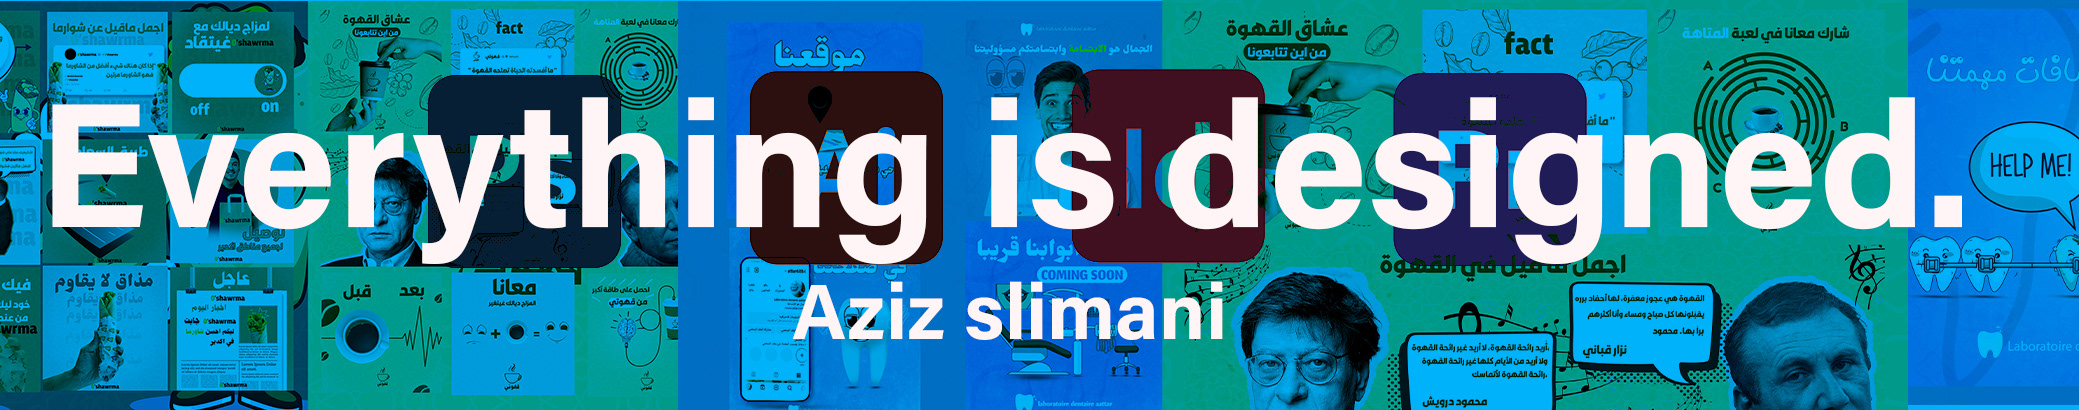 Aziz slimani のプロファイルバナー